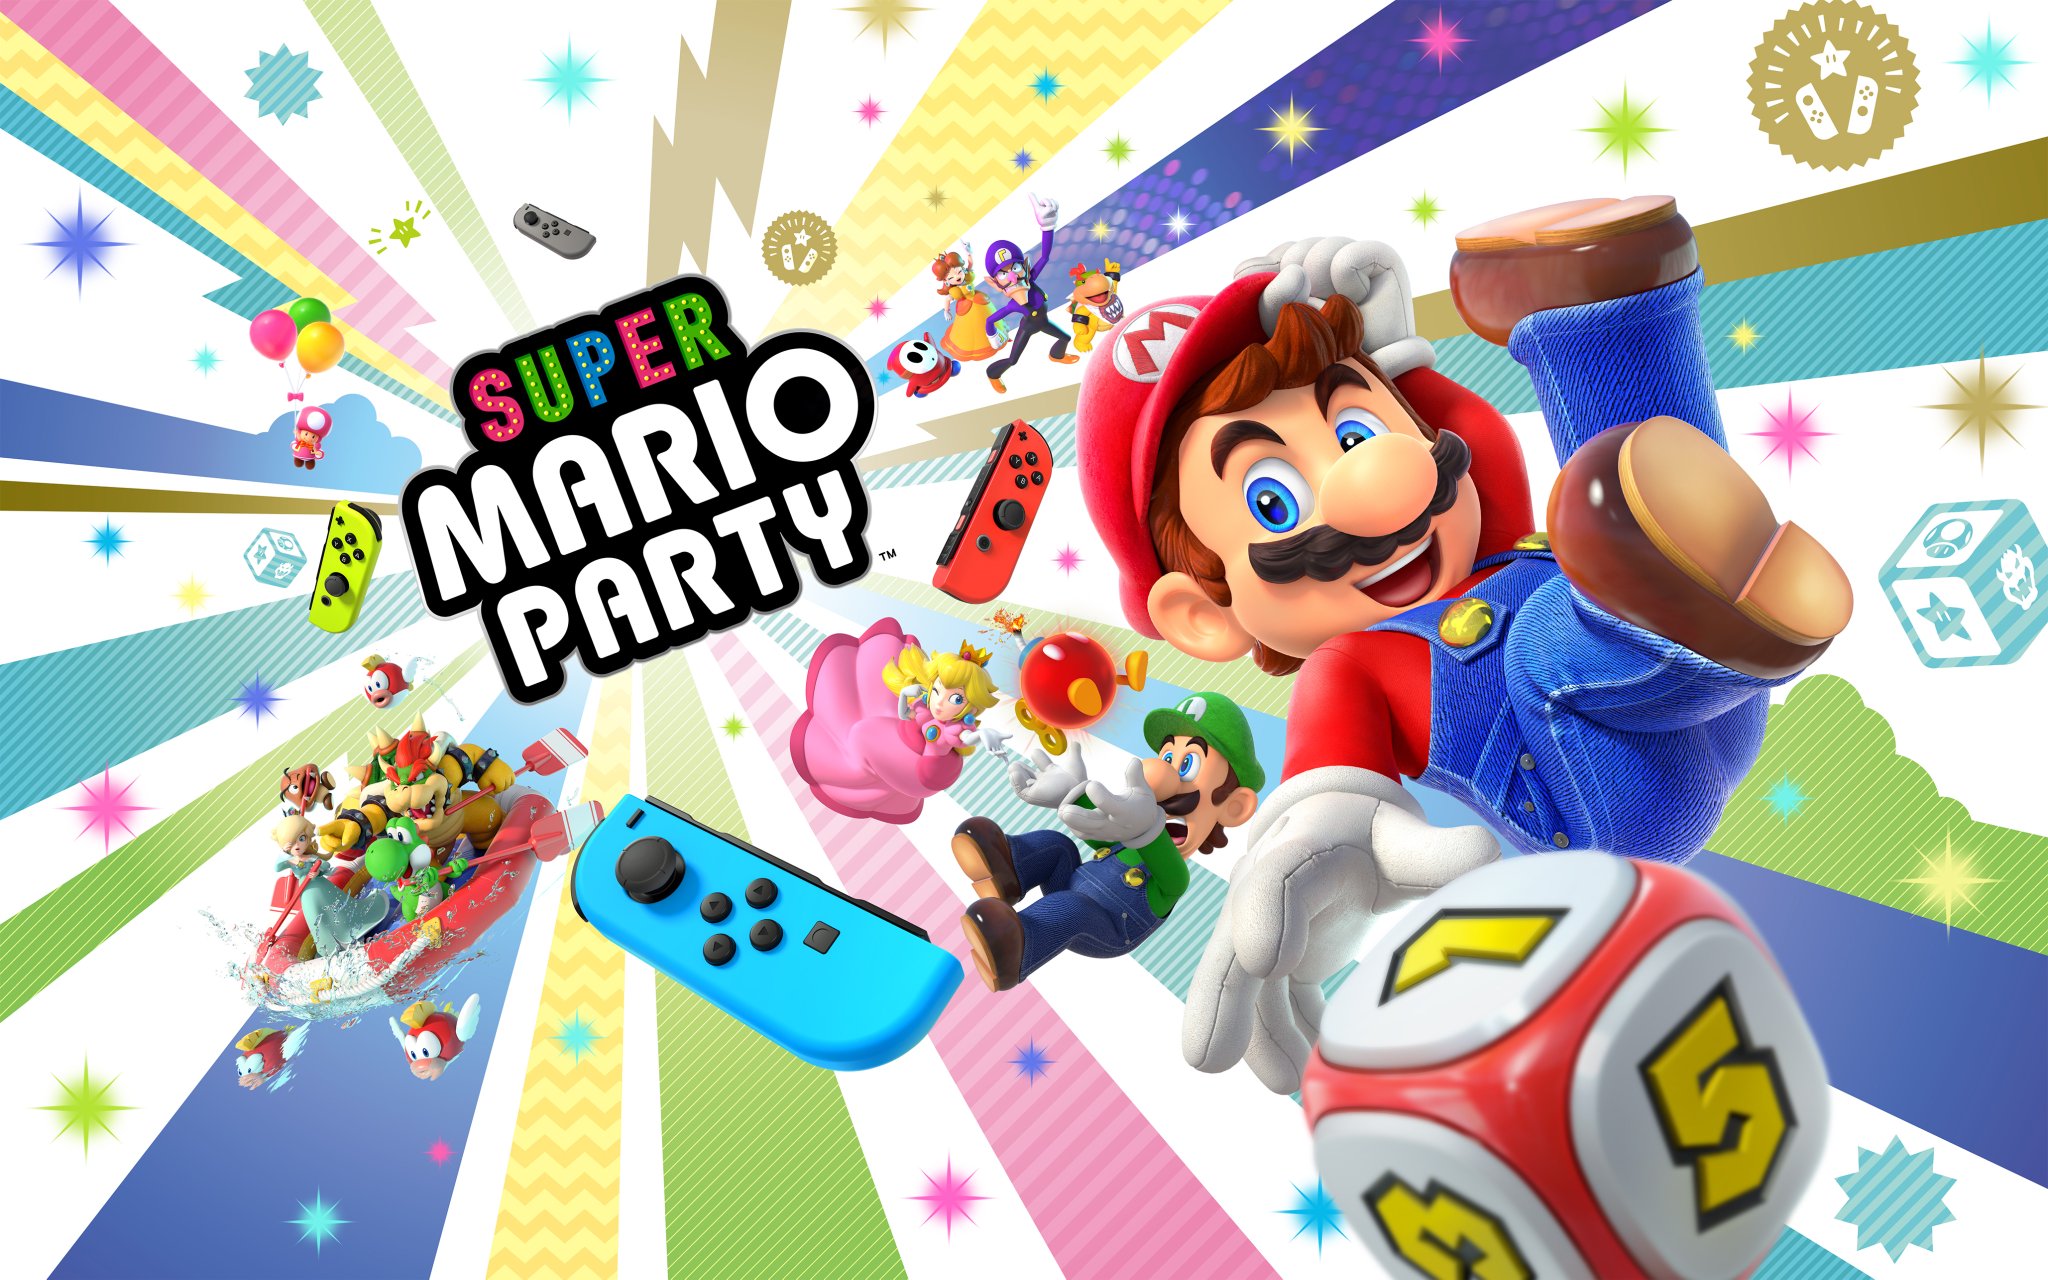 E3 2018: Super Mario Party announced for Switch